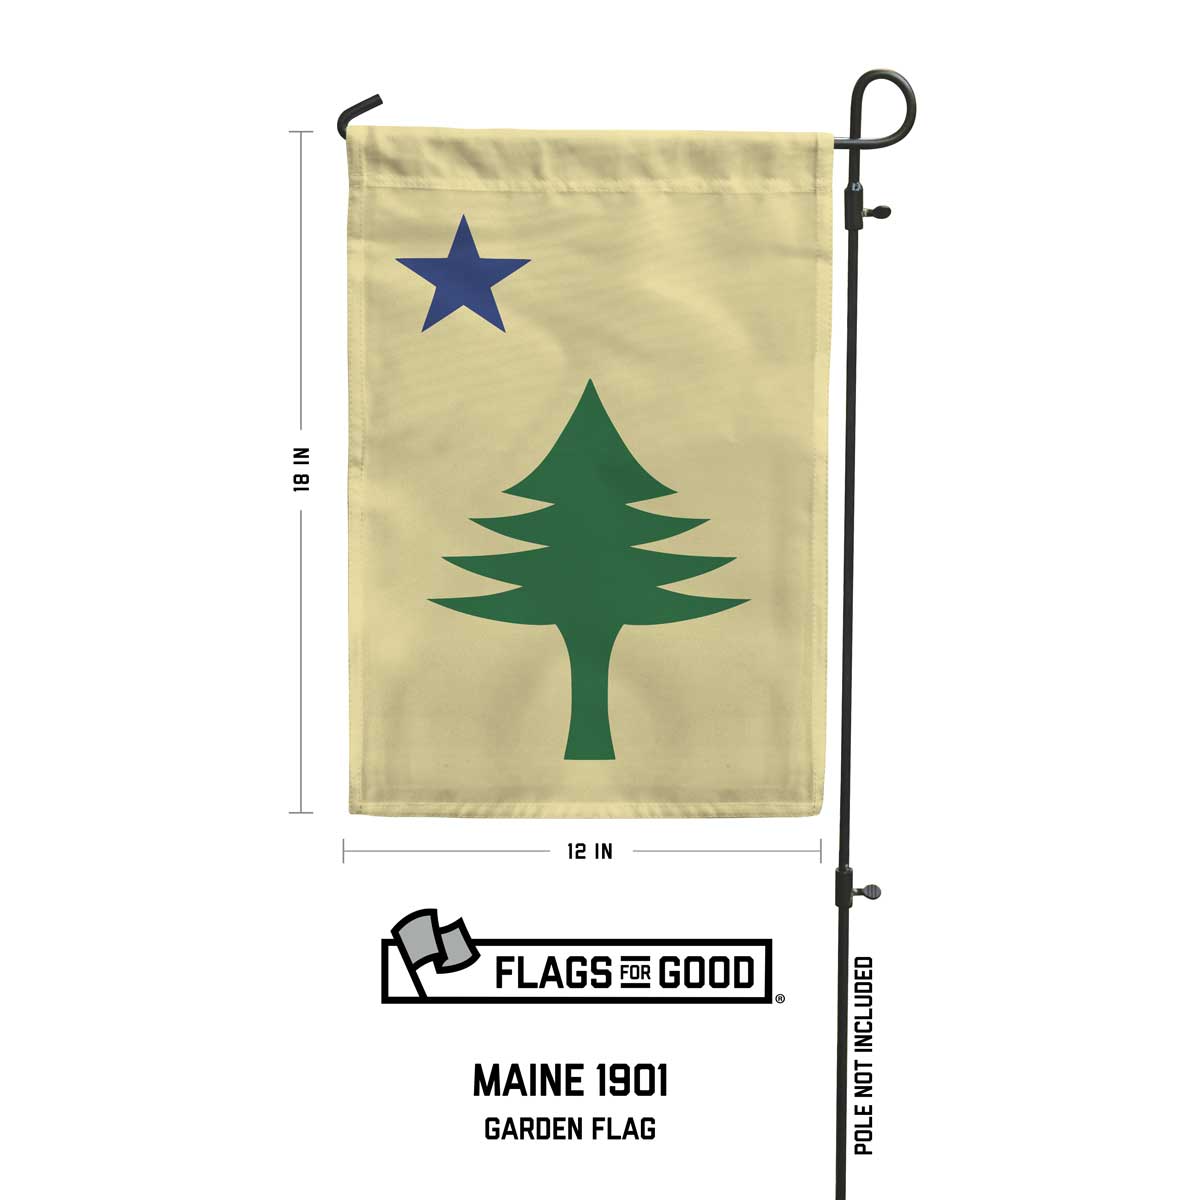 Maine 1901 garden flag measurements of 12"x18"